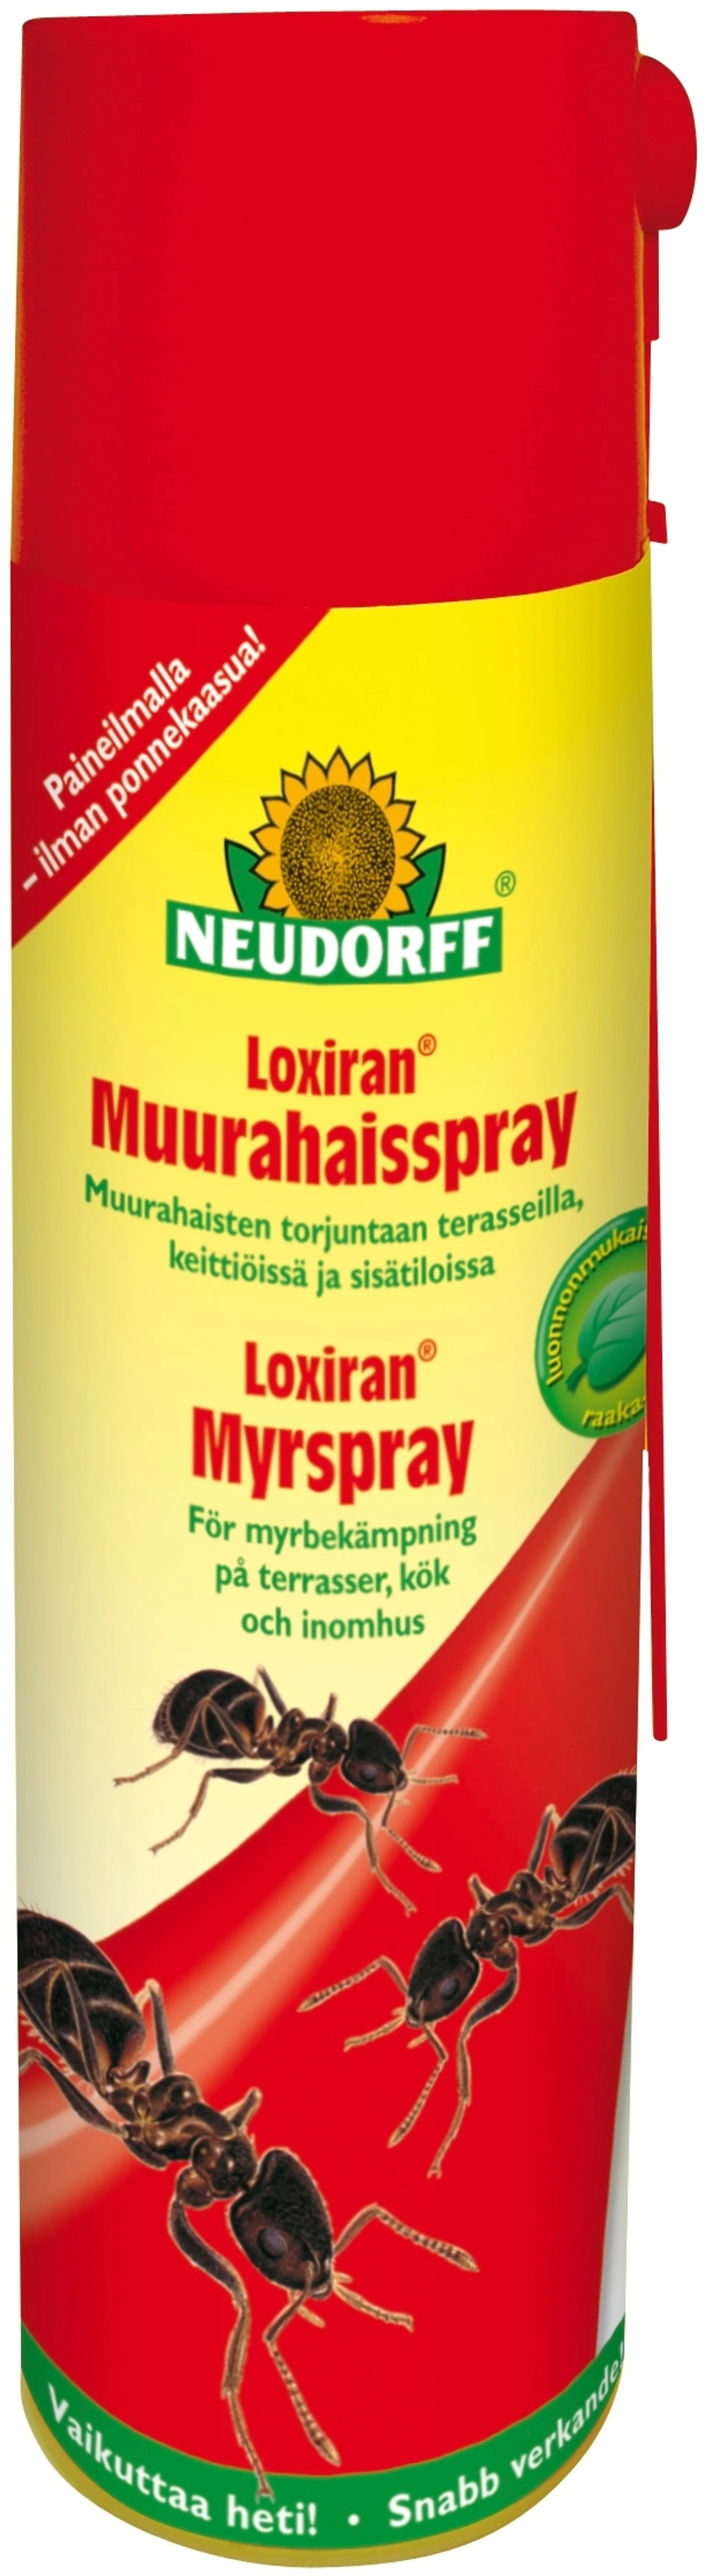 Neudorff 400 ml muurahaisspray Loxiran